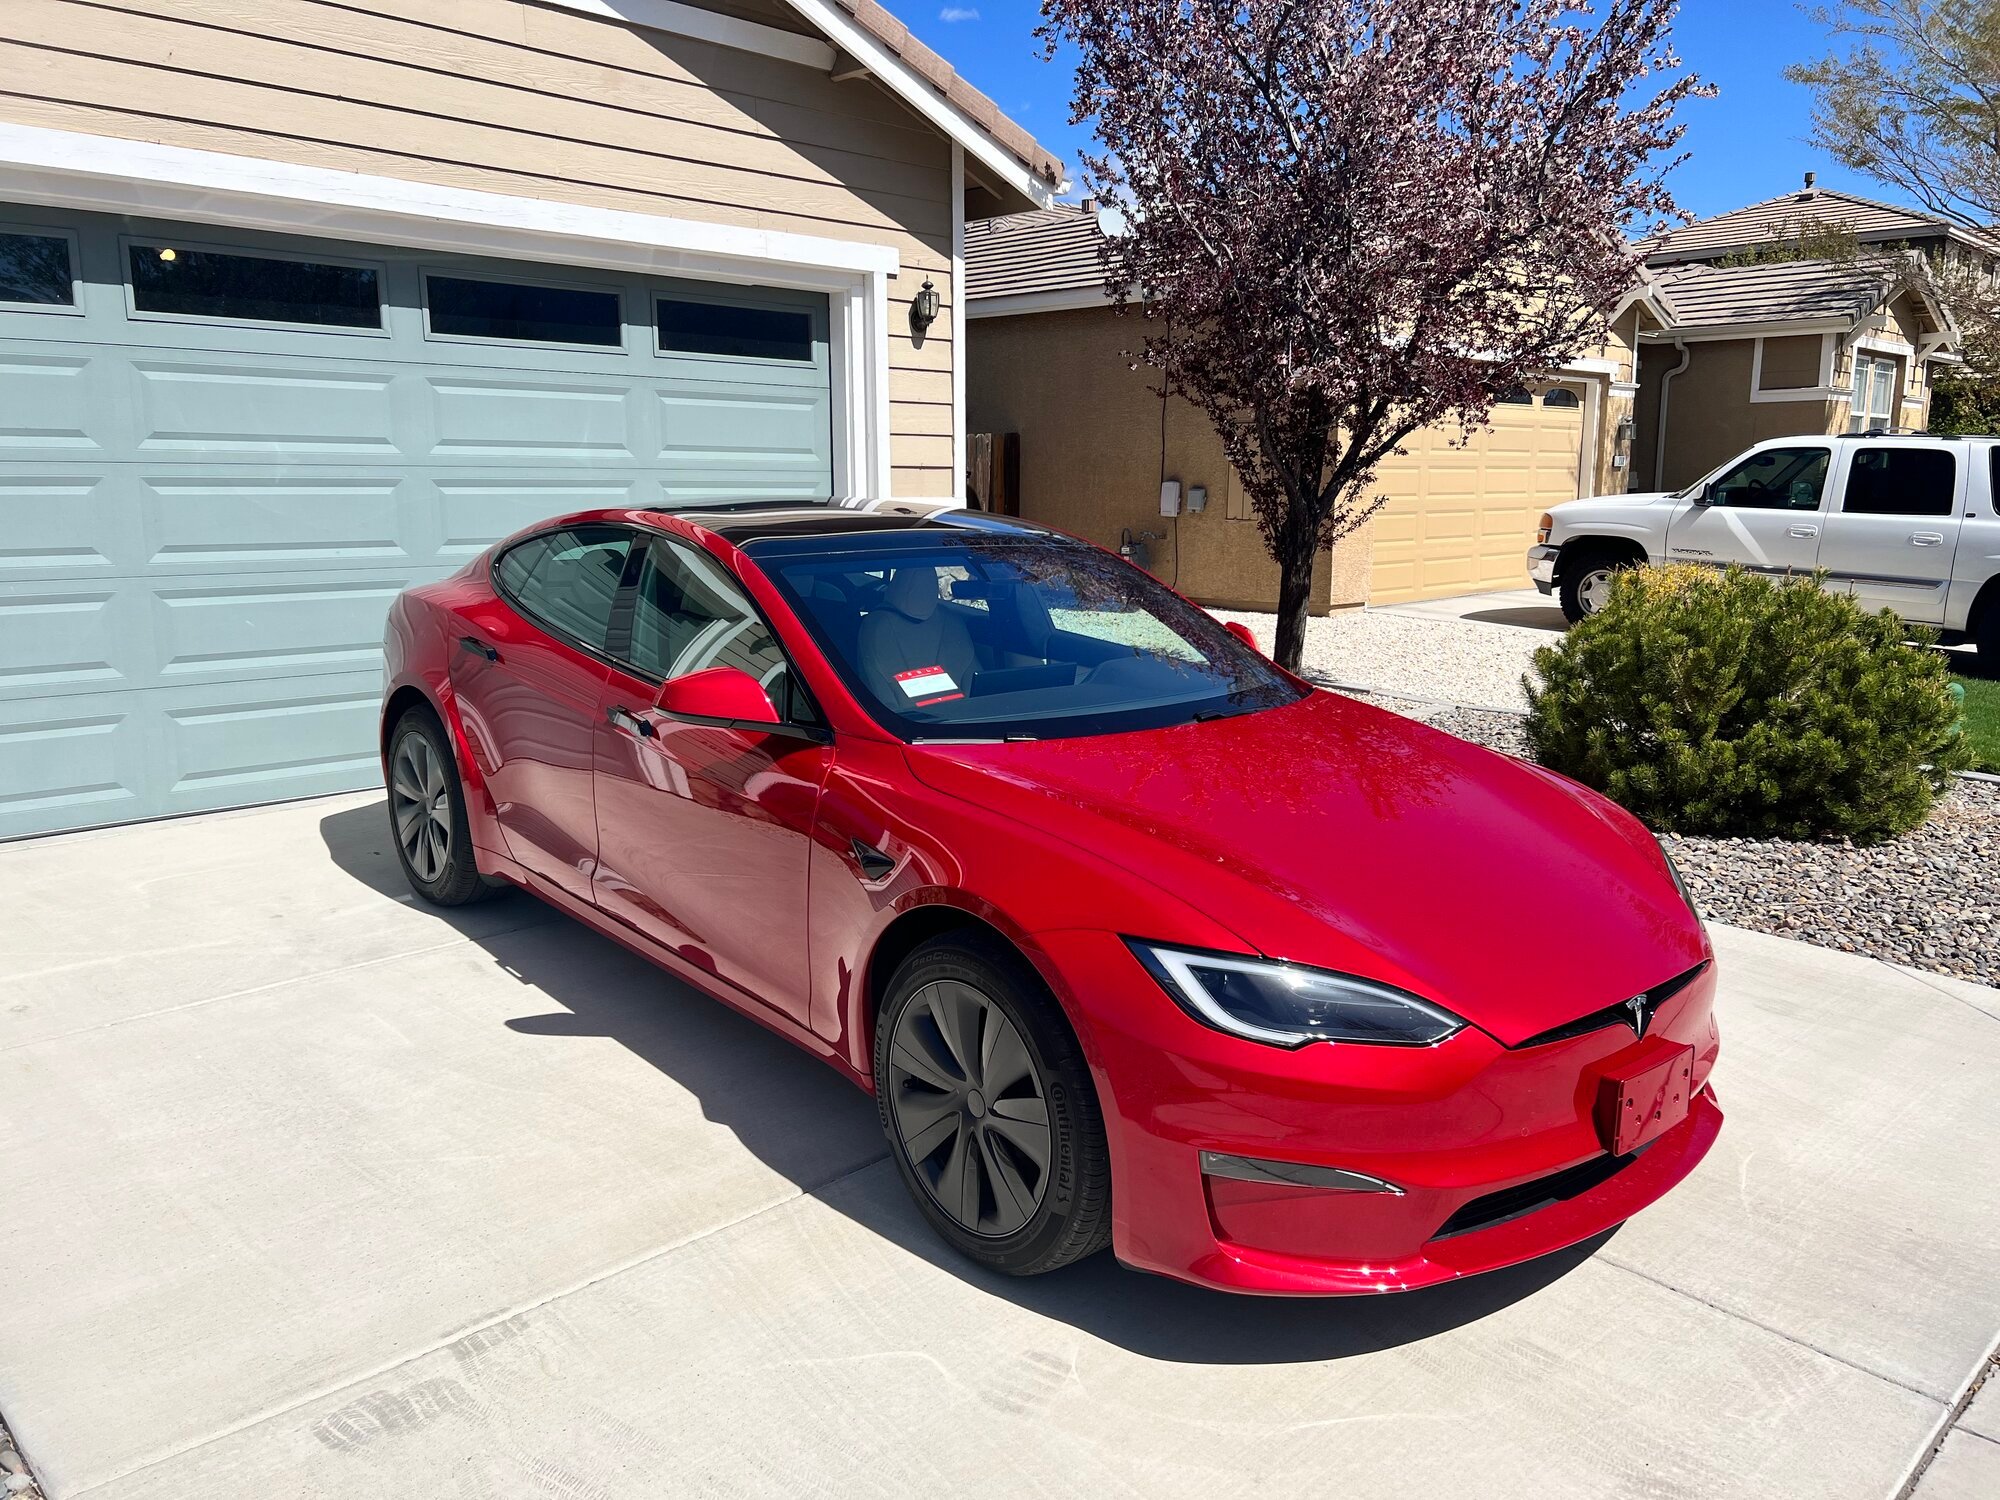 Not Available - 2022 Model S Long Range - Red Ext/Cream Int - No FSD -  $104K | Tesla Motors Club